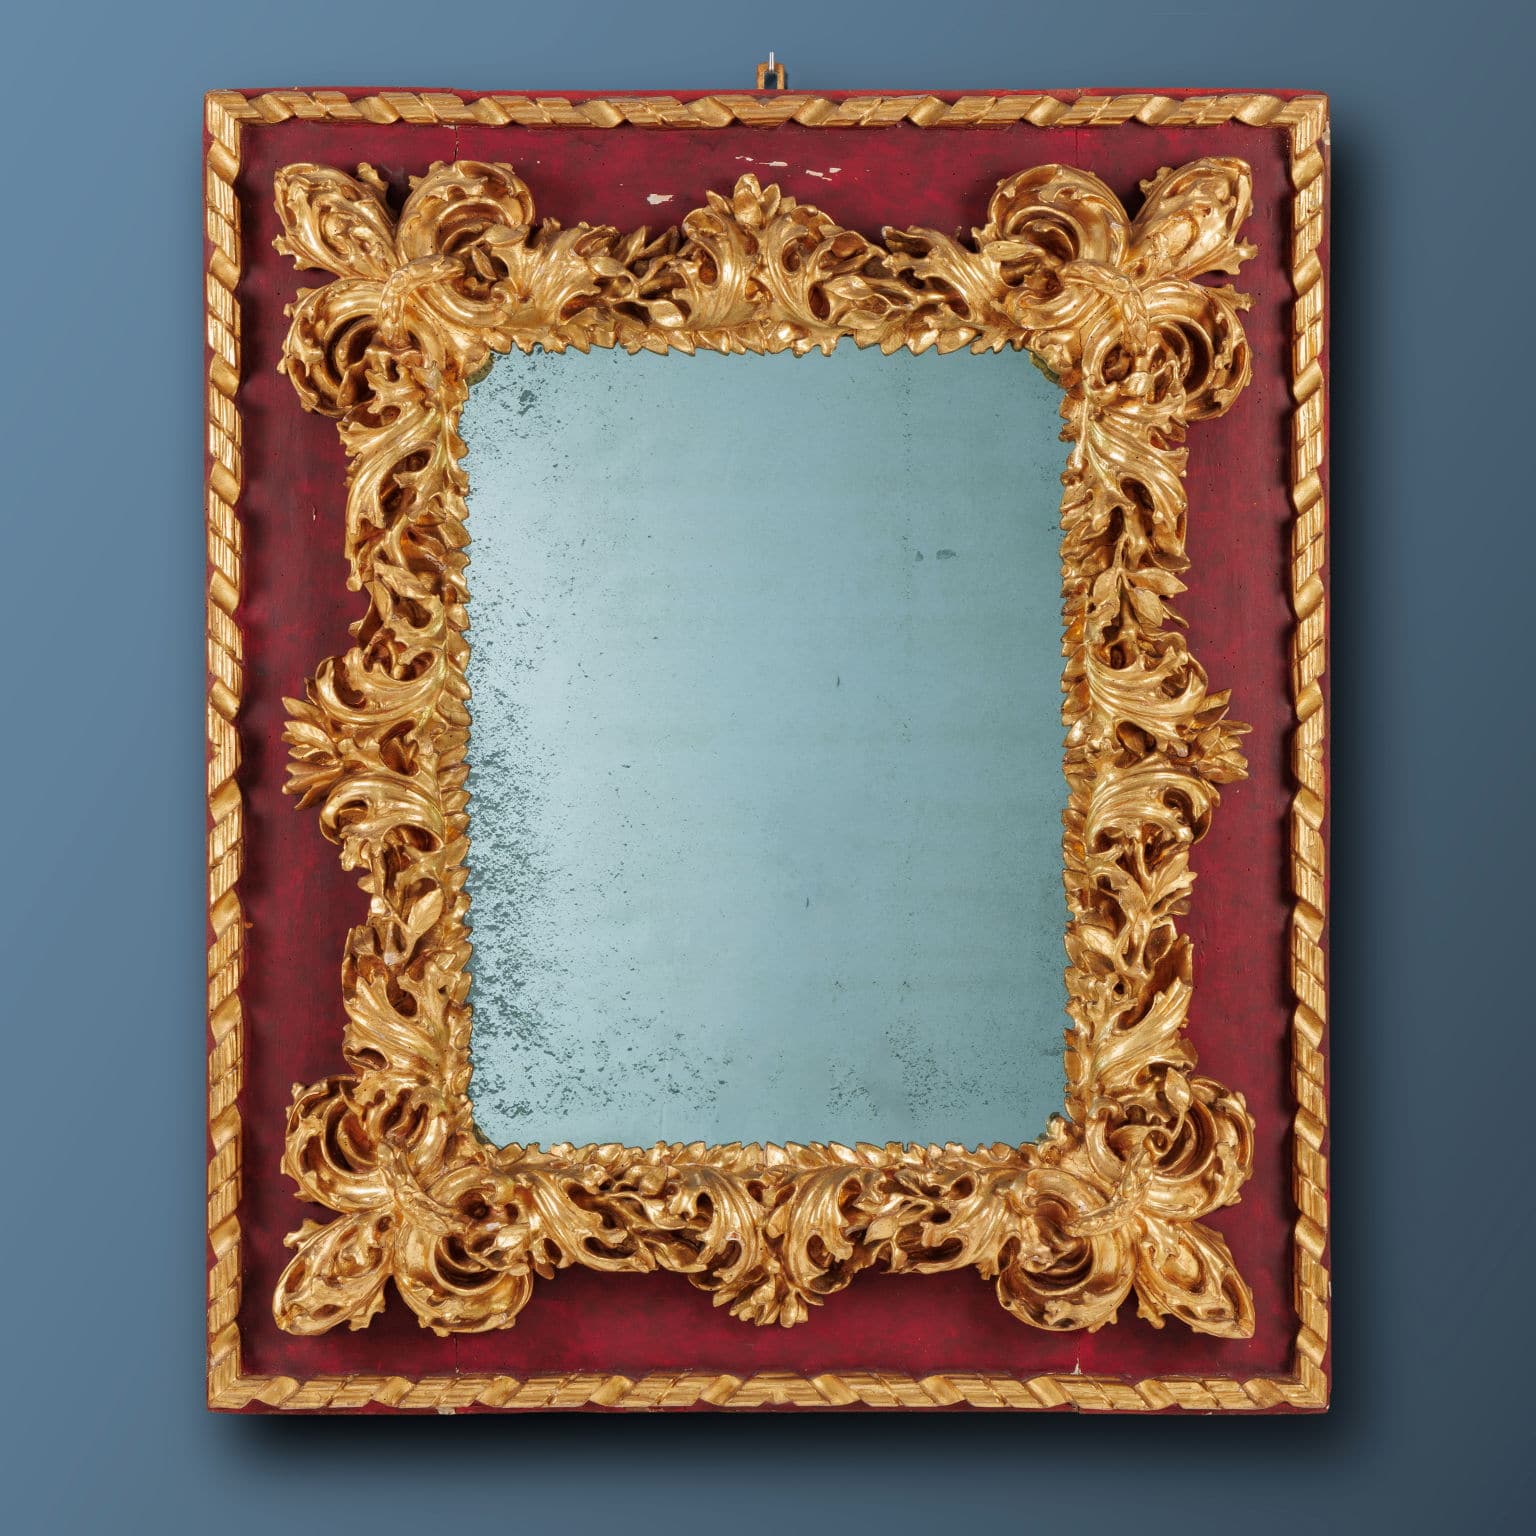 Cassette mirror, Bologna Early 18th century